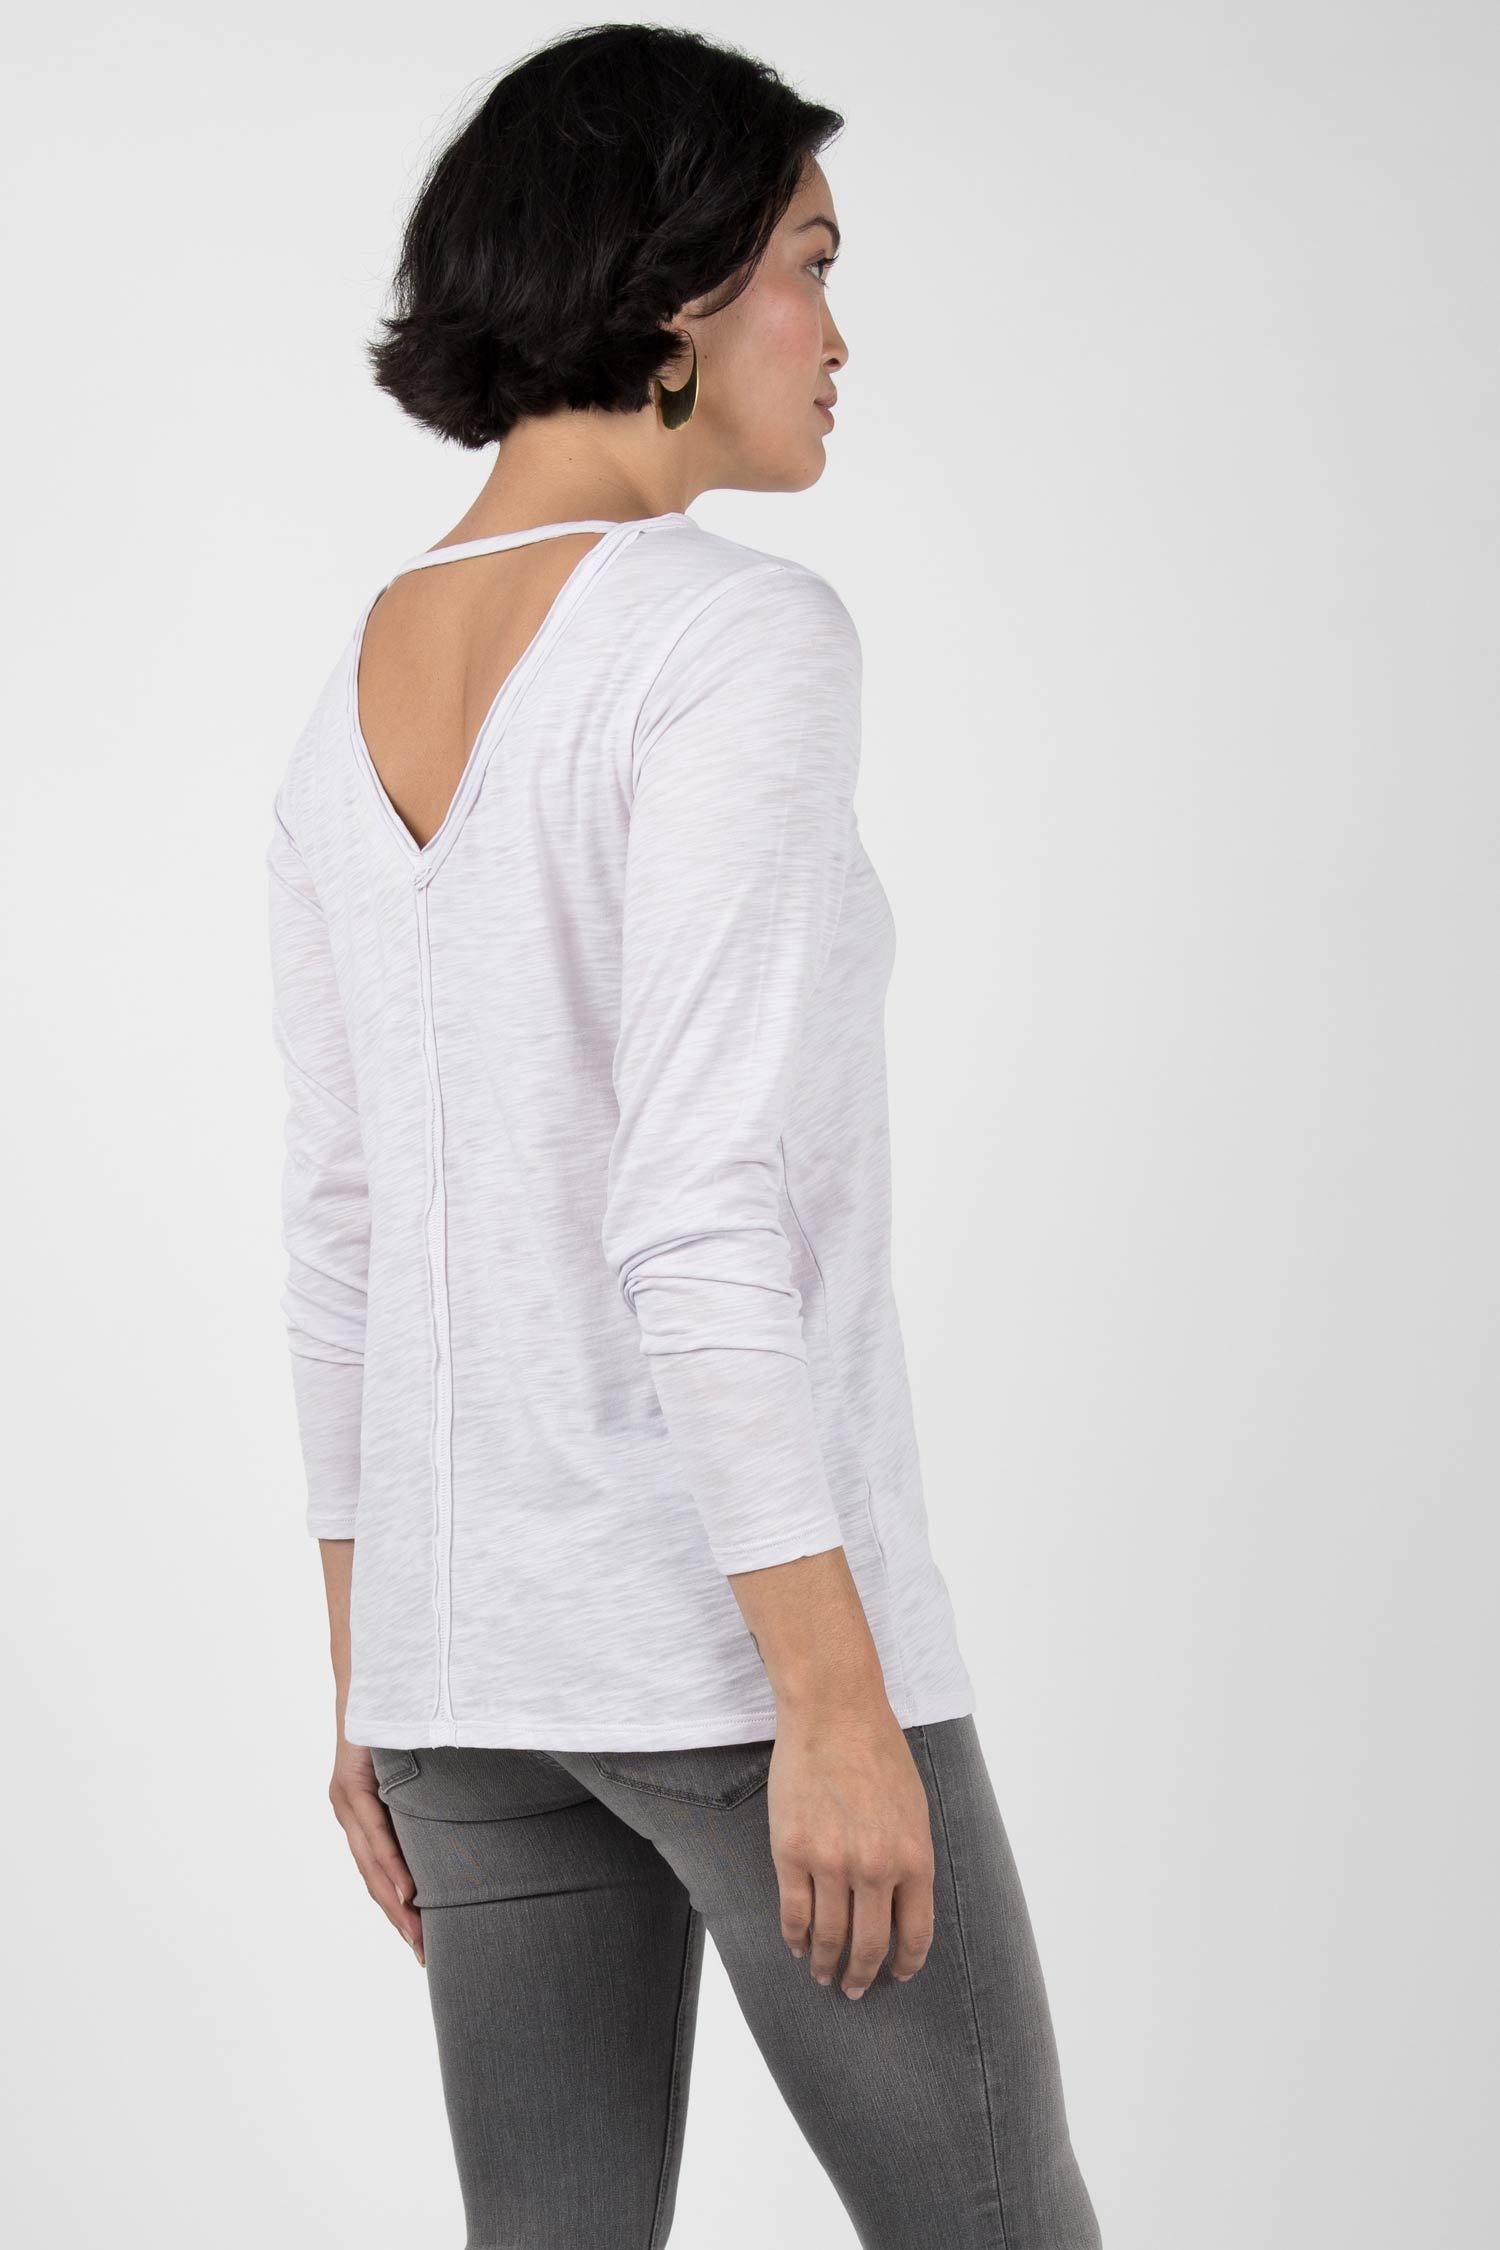 Womens Organic Cotton Shirt | Reversible V Back Top